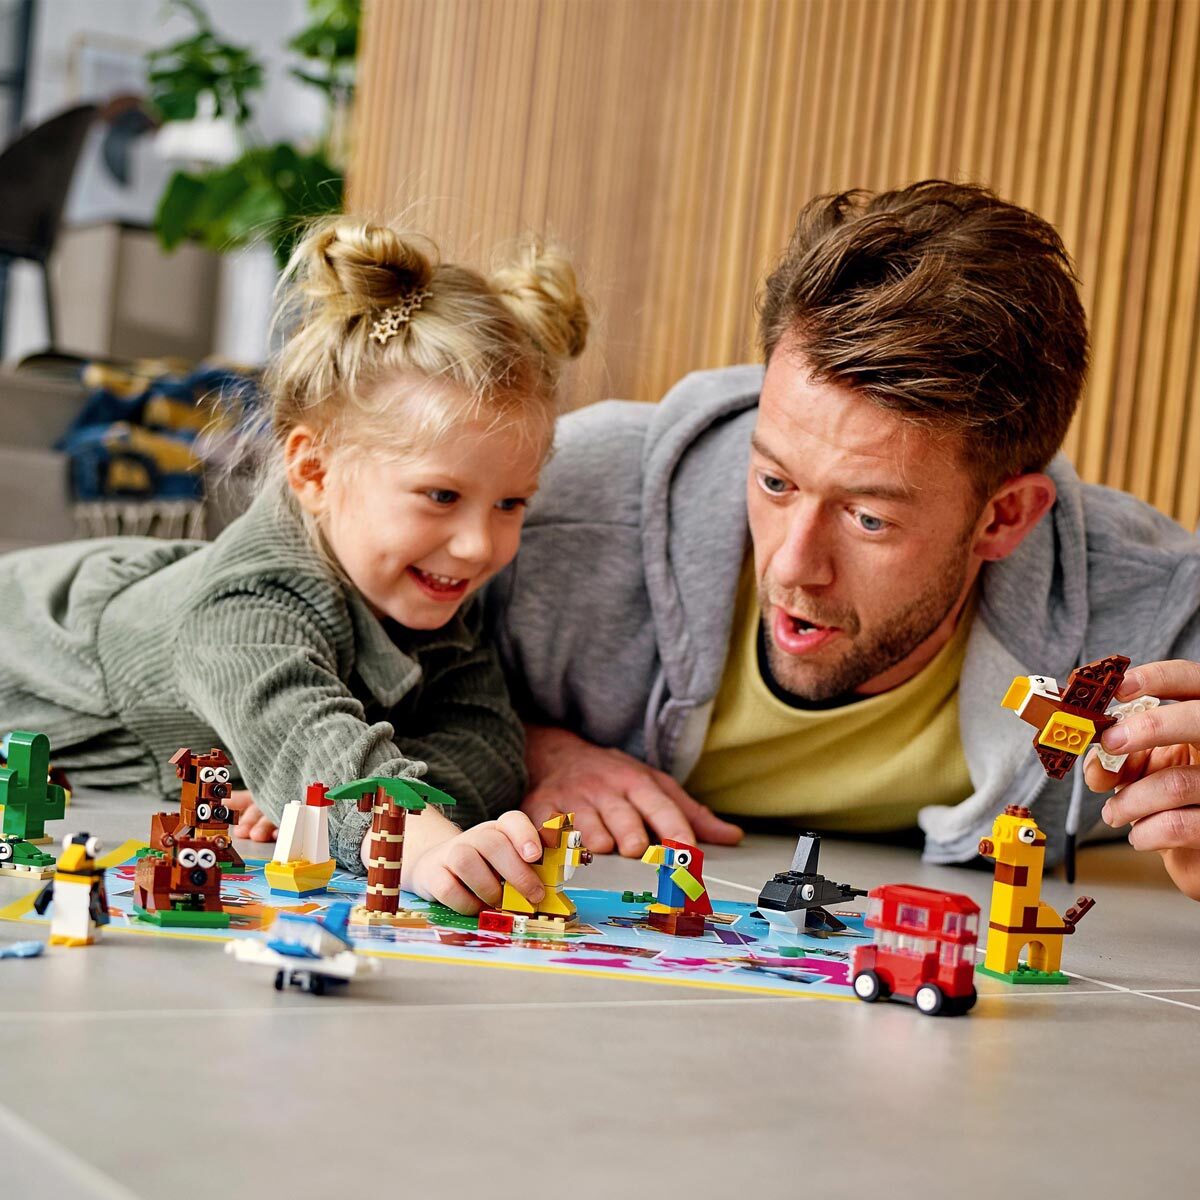 Buy LEGO Classic Around the World Lifestyle Image at costco.co.uk